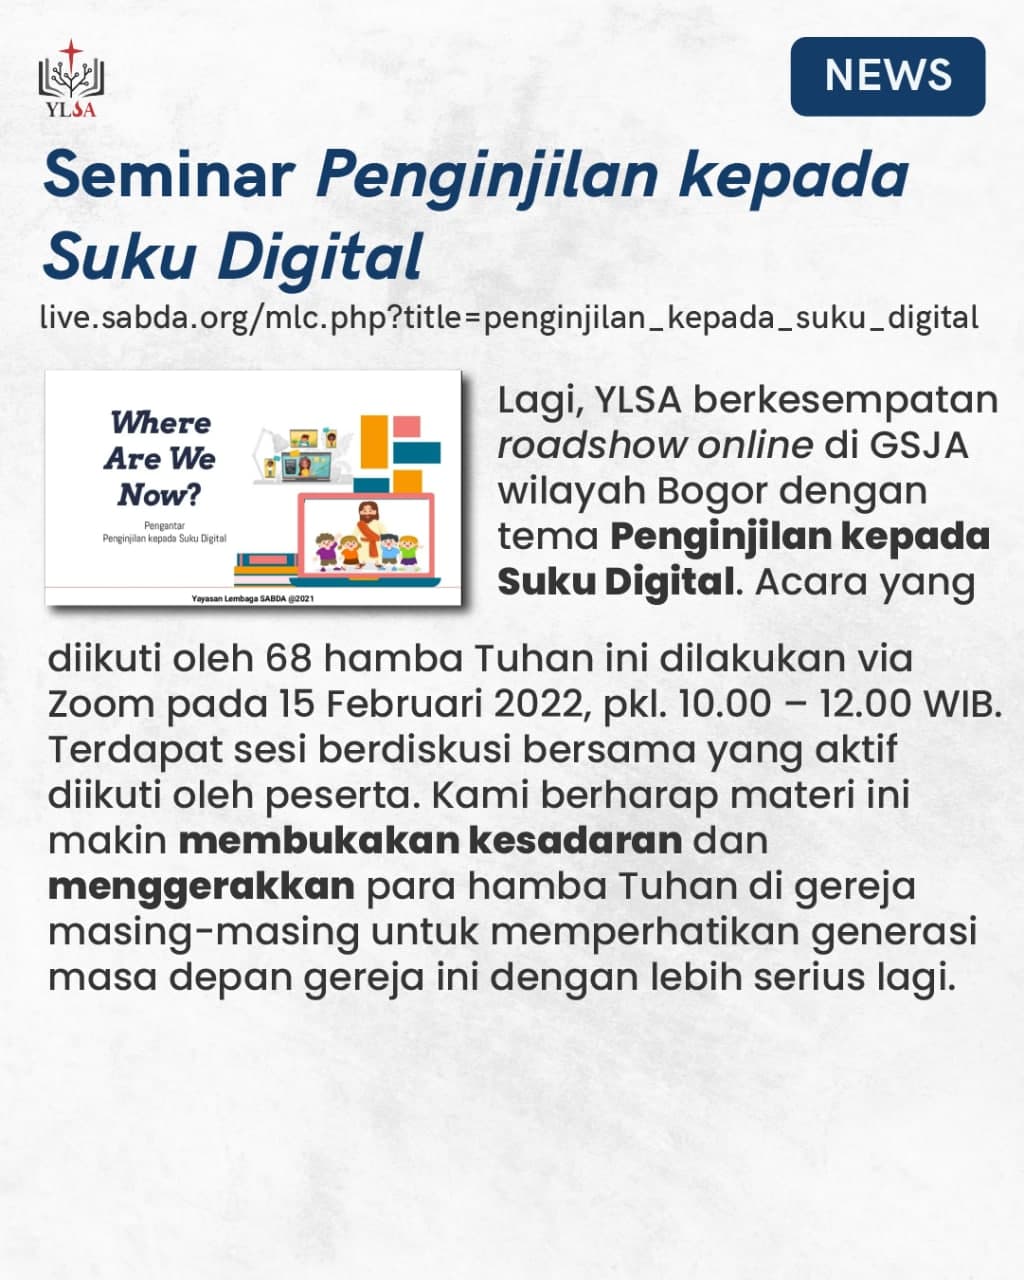 Roadshow online di GSJA wilayah Bogor bertema "Penginjilan kepada Suku Digital" dilakukan pada 15 Februari 2022 dan dihadiri 68 hamba Tuhan.